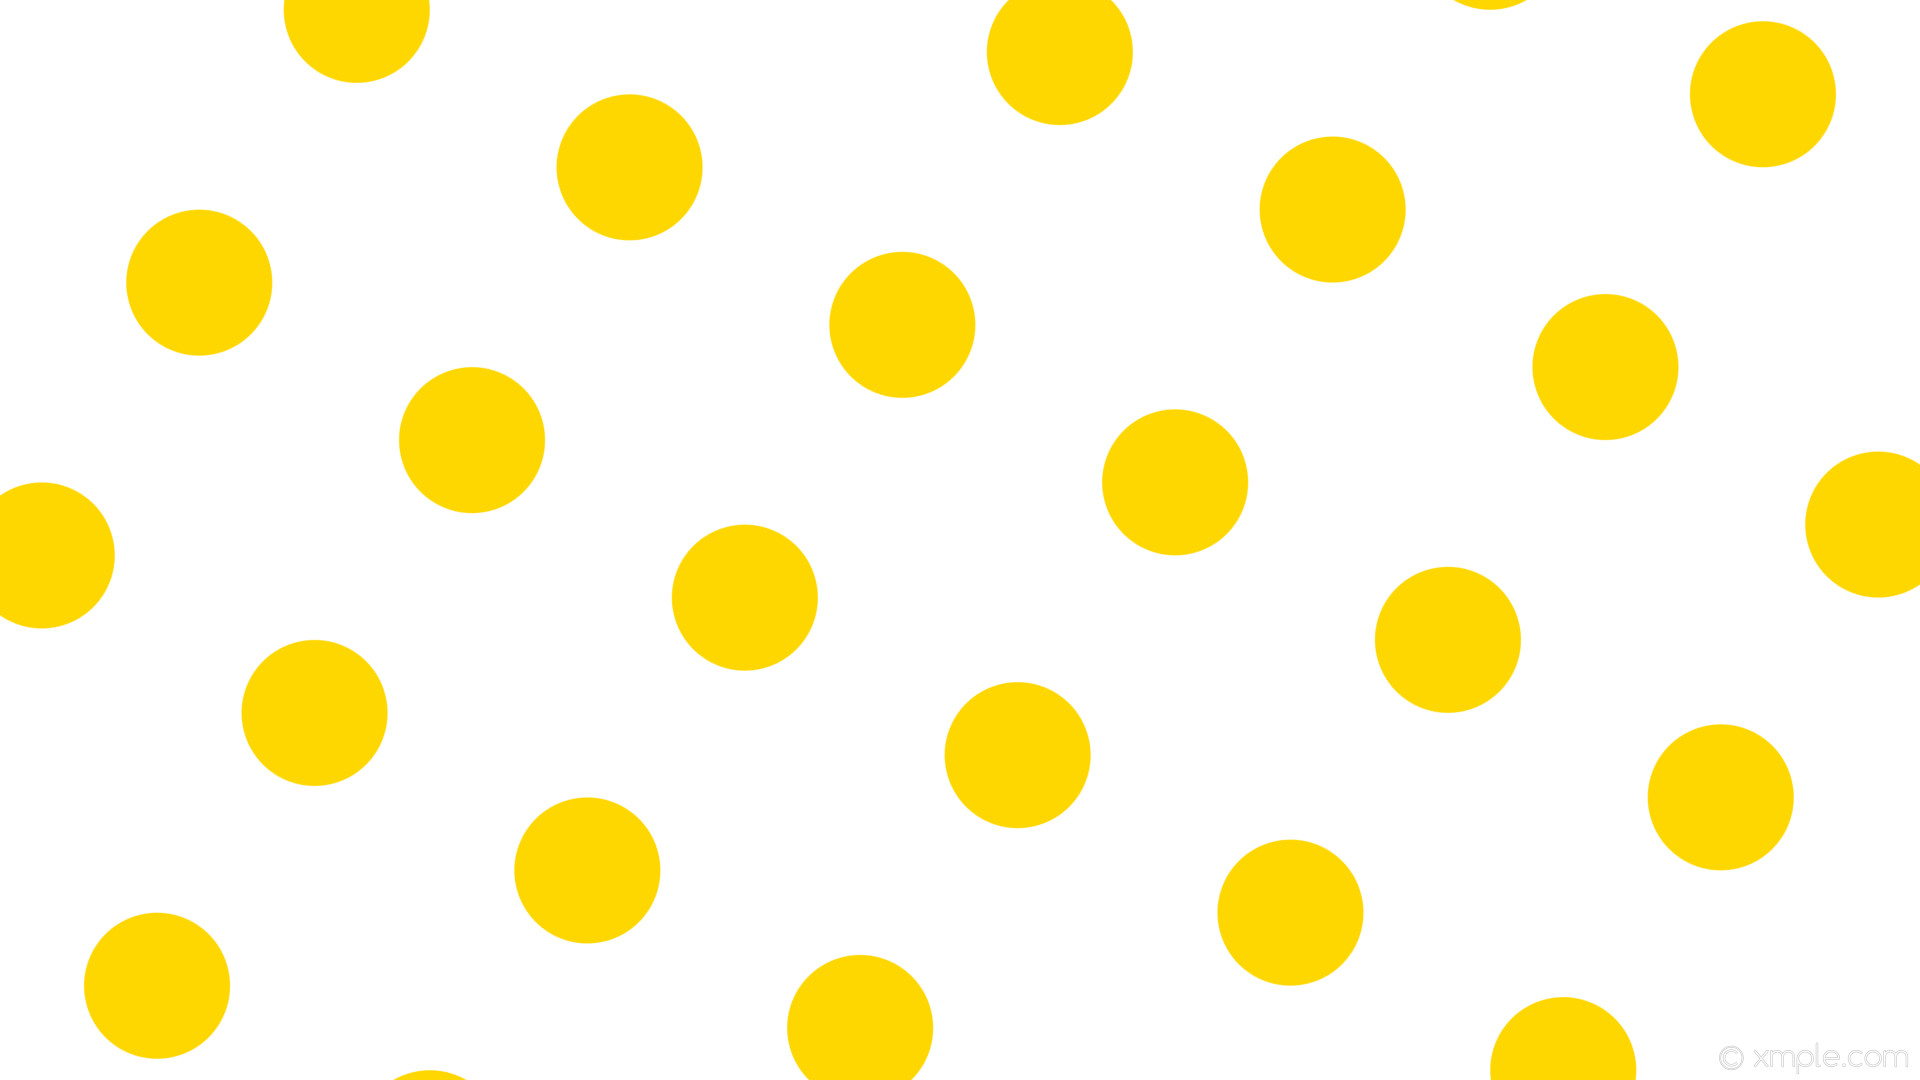 Wallpaper white polka dots spots yellow gold #ffffff #ffd700 240 146px 315px